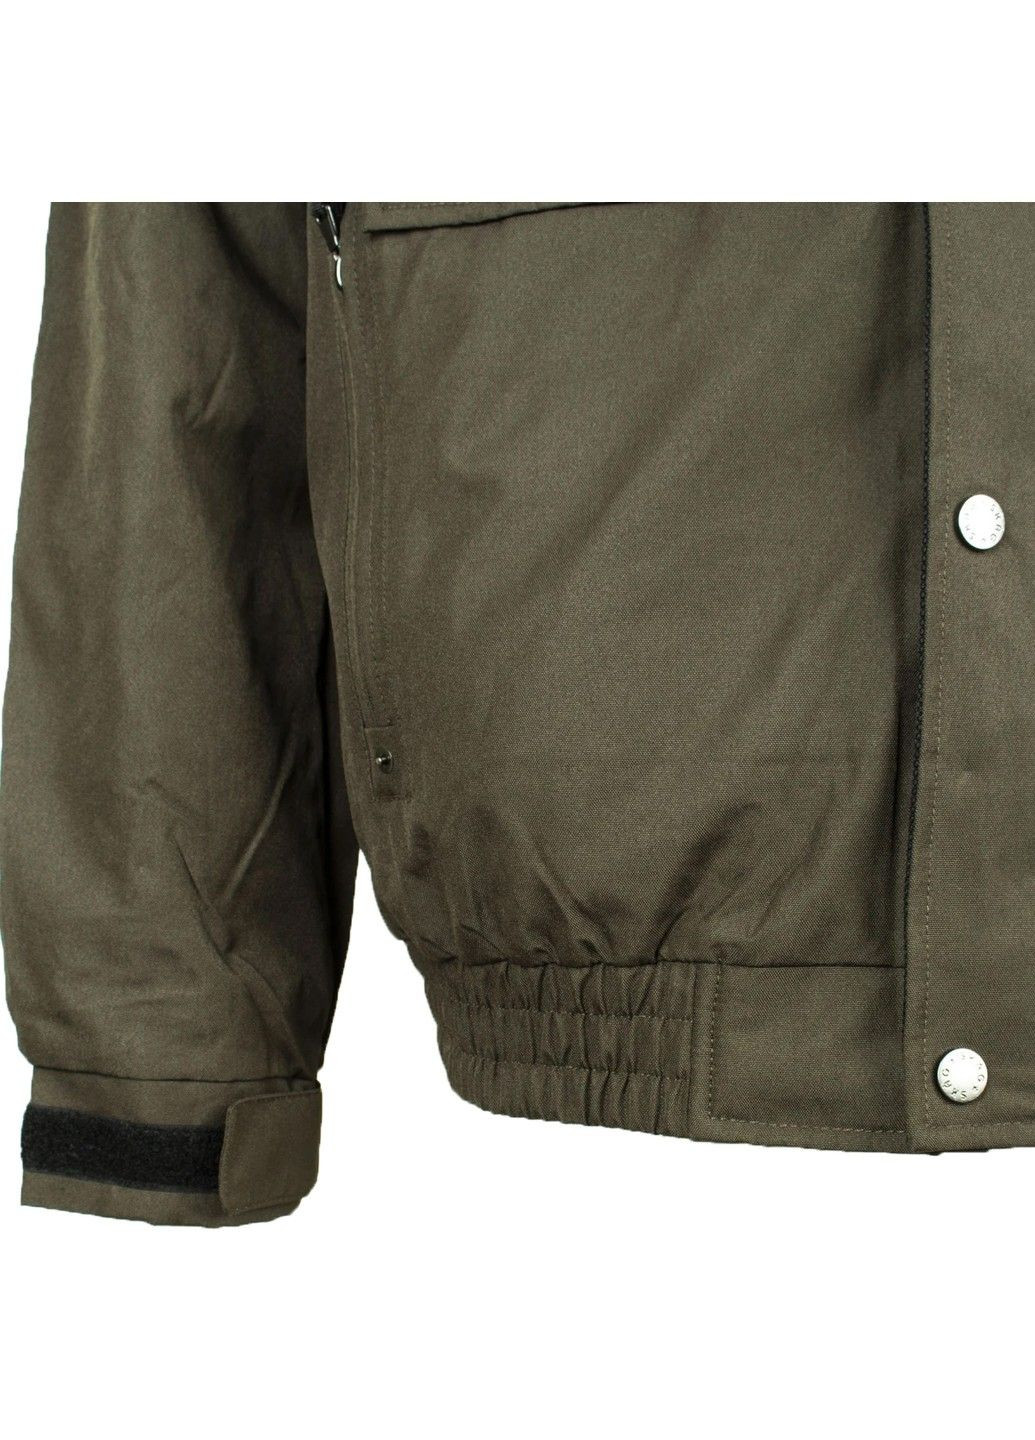 Зеленая зимняя куртка мужская km&kf No Brand